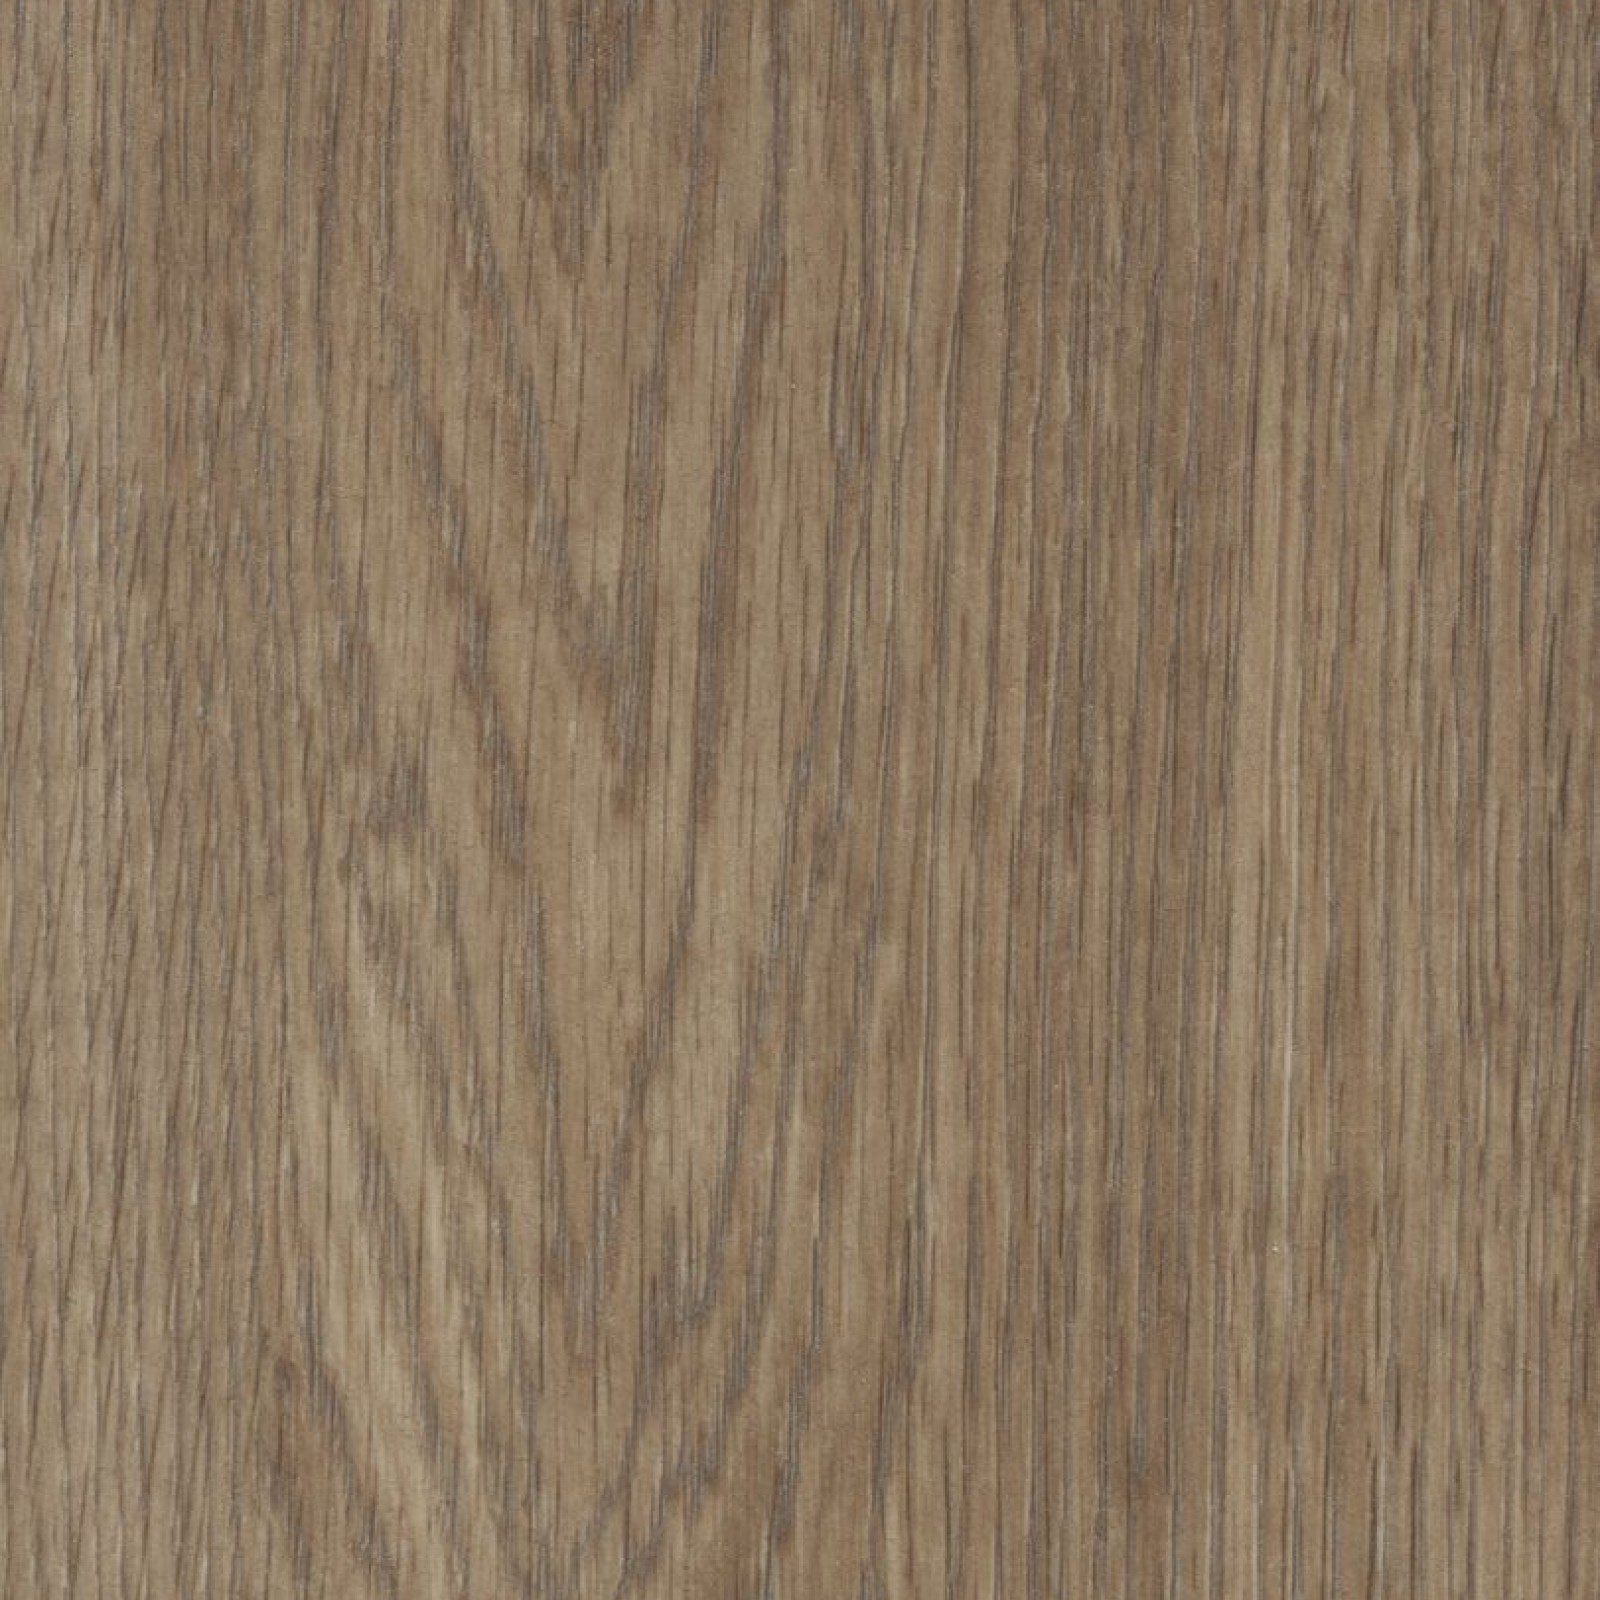 Vzor - 60374 natural collage oak